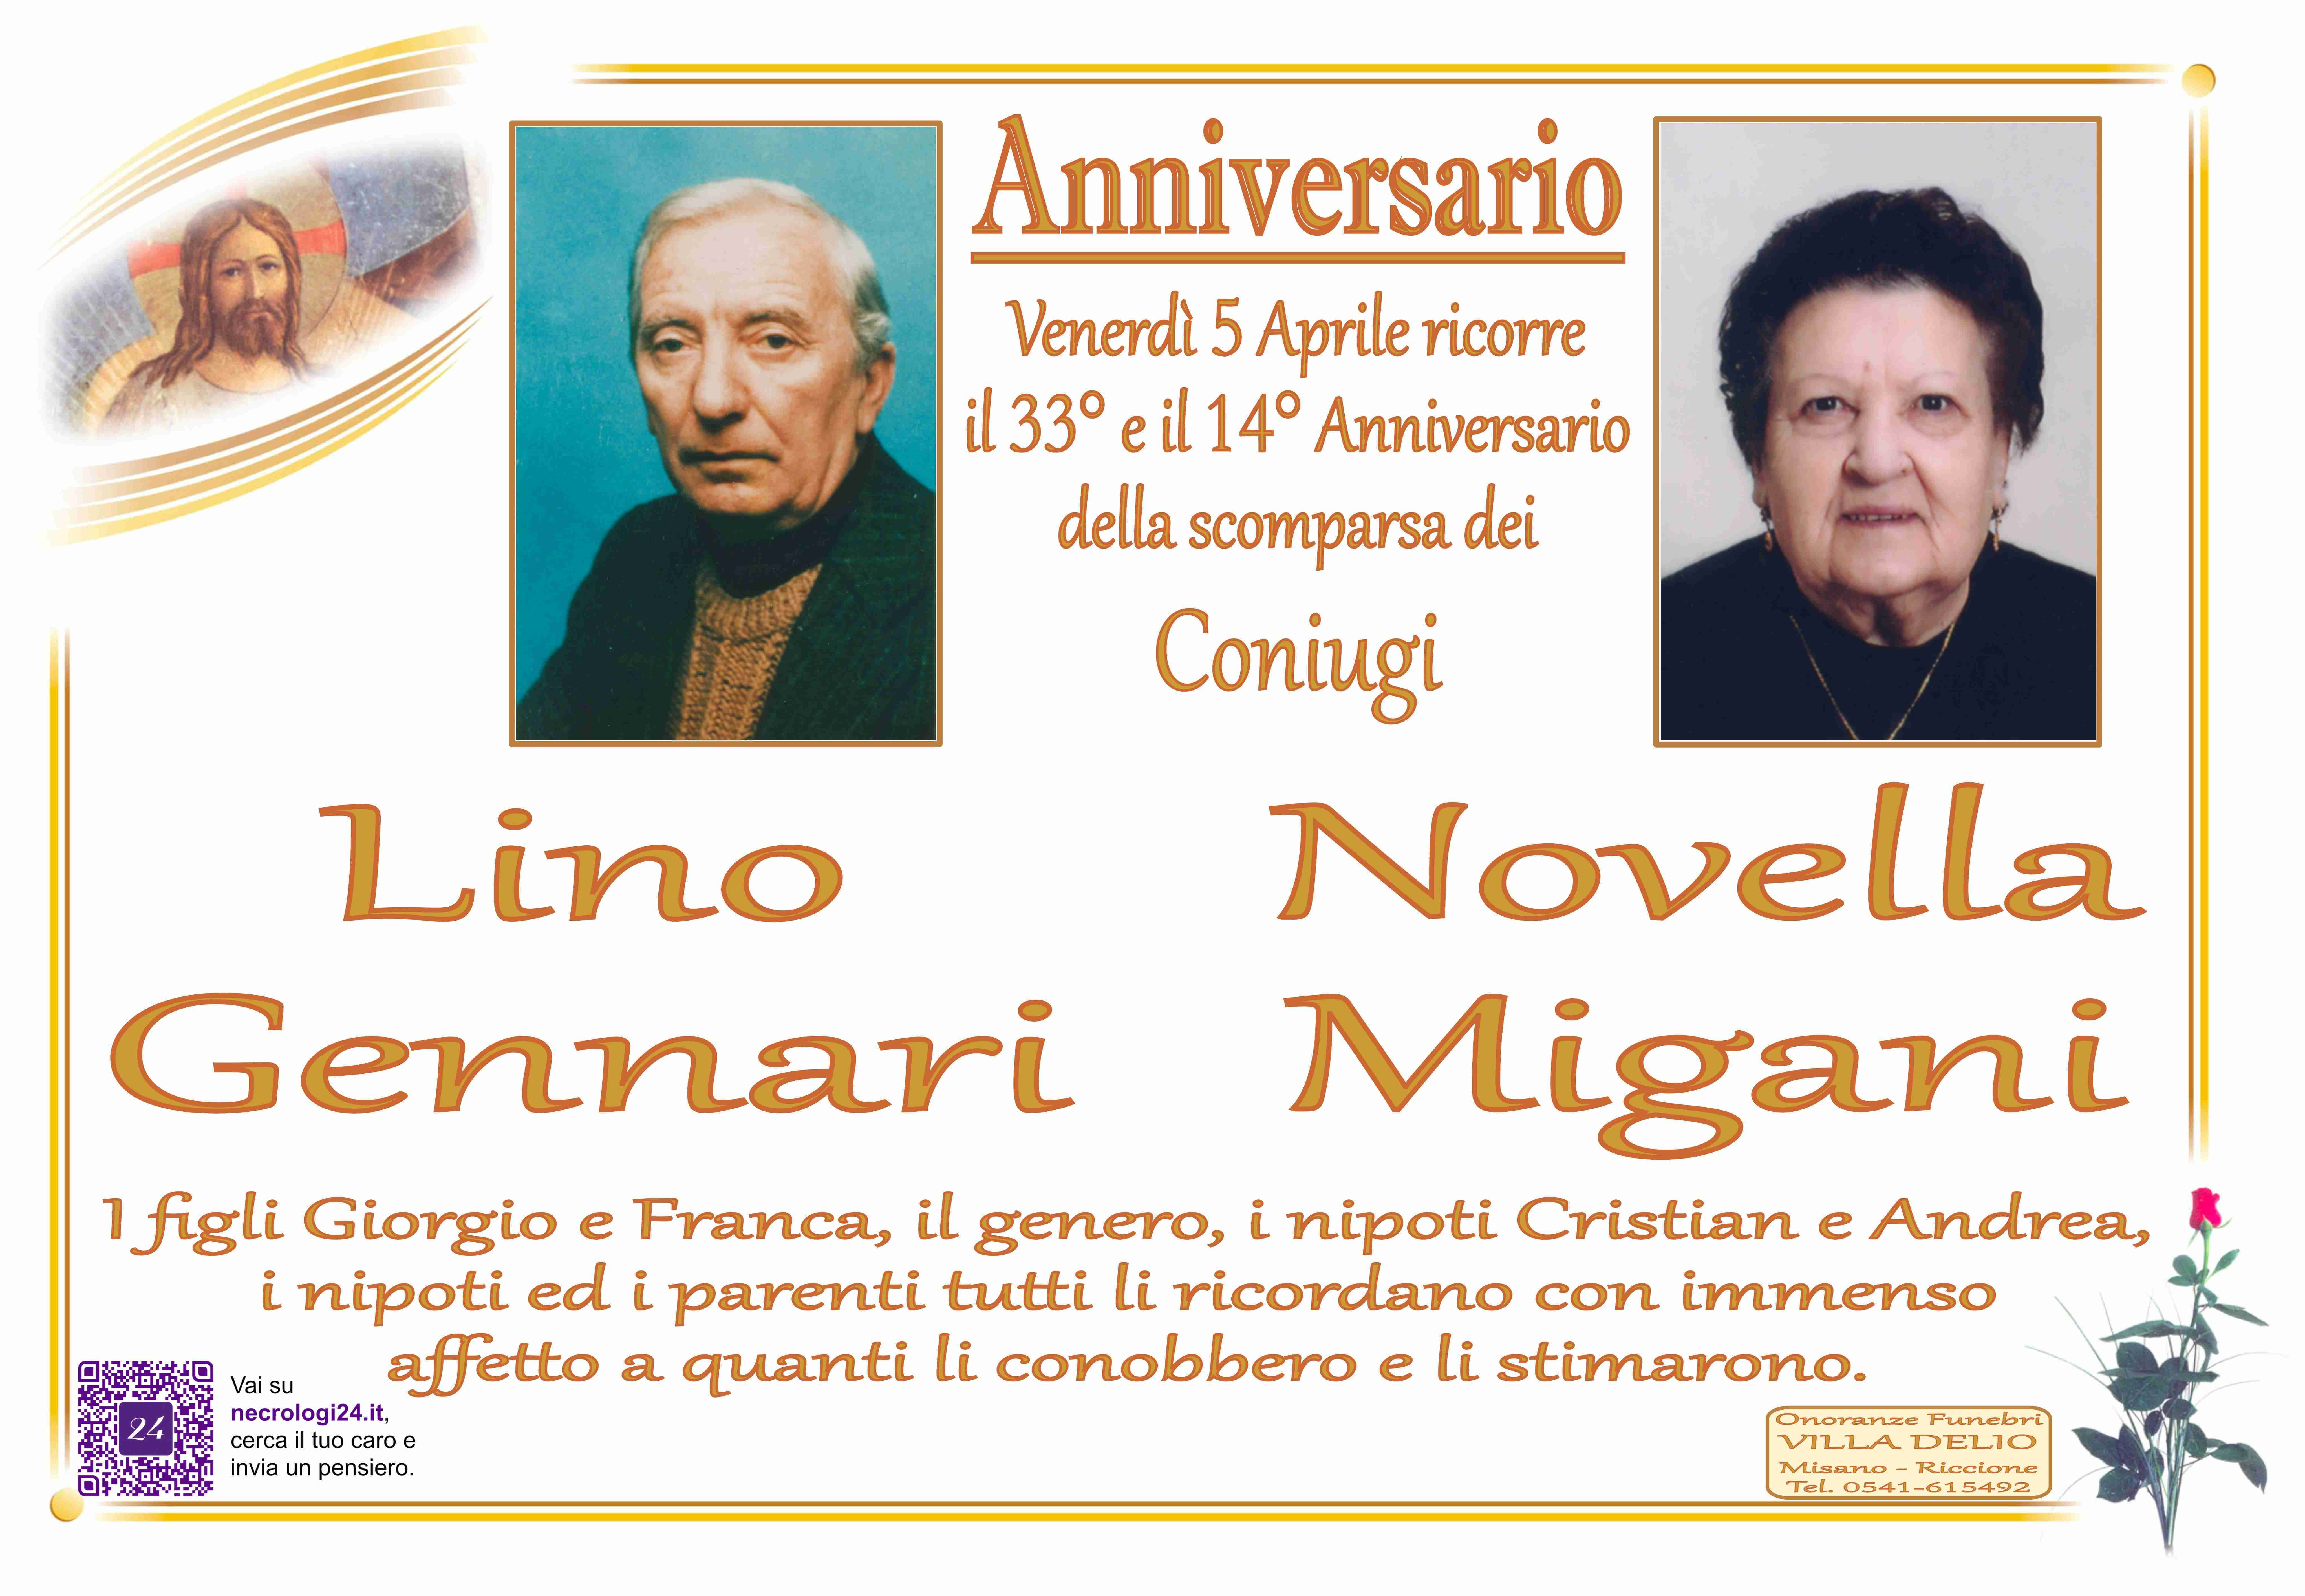 Lino Gennari e Novella Migani